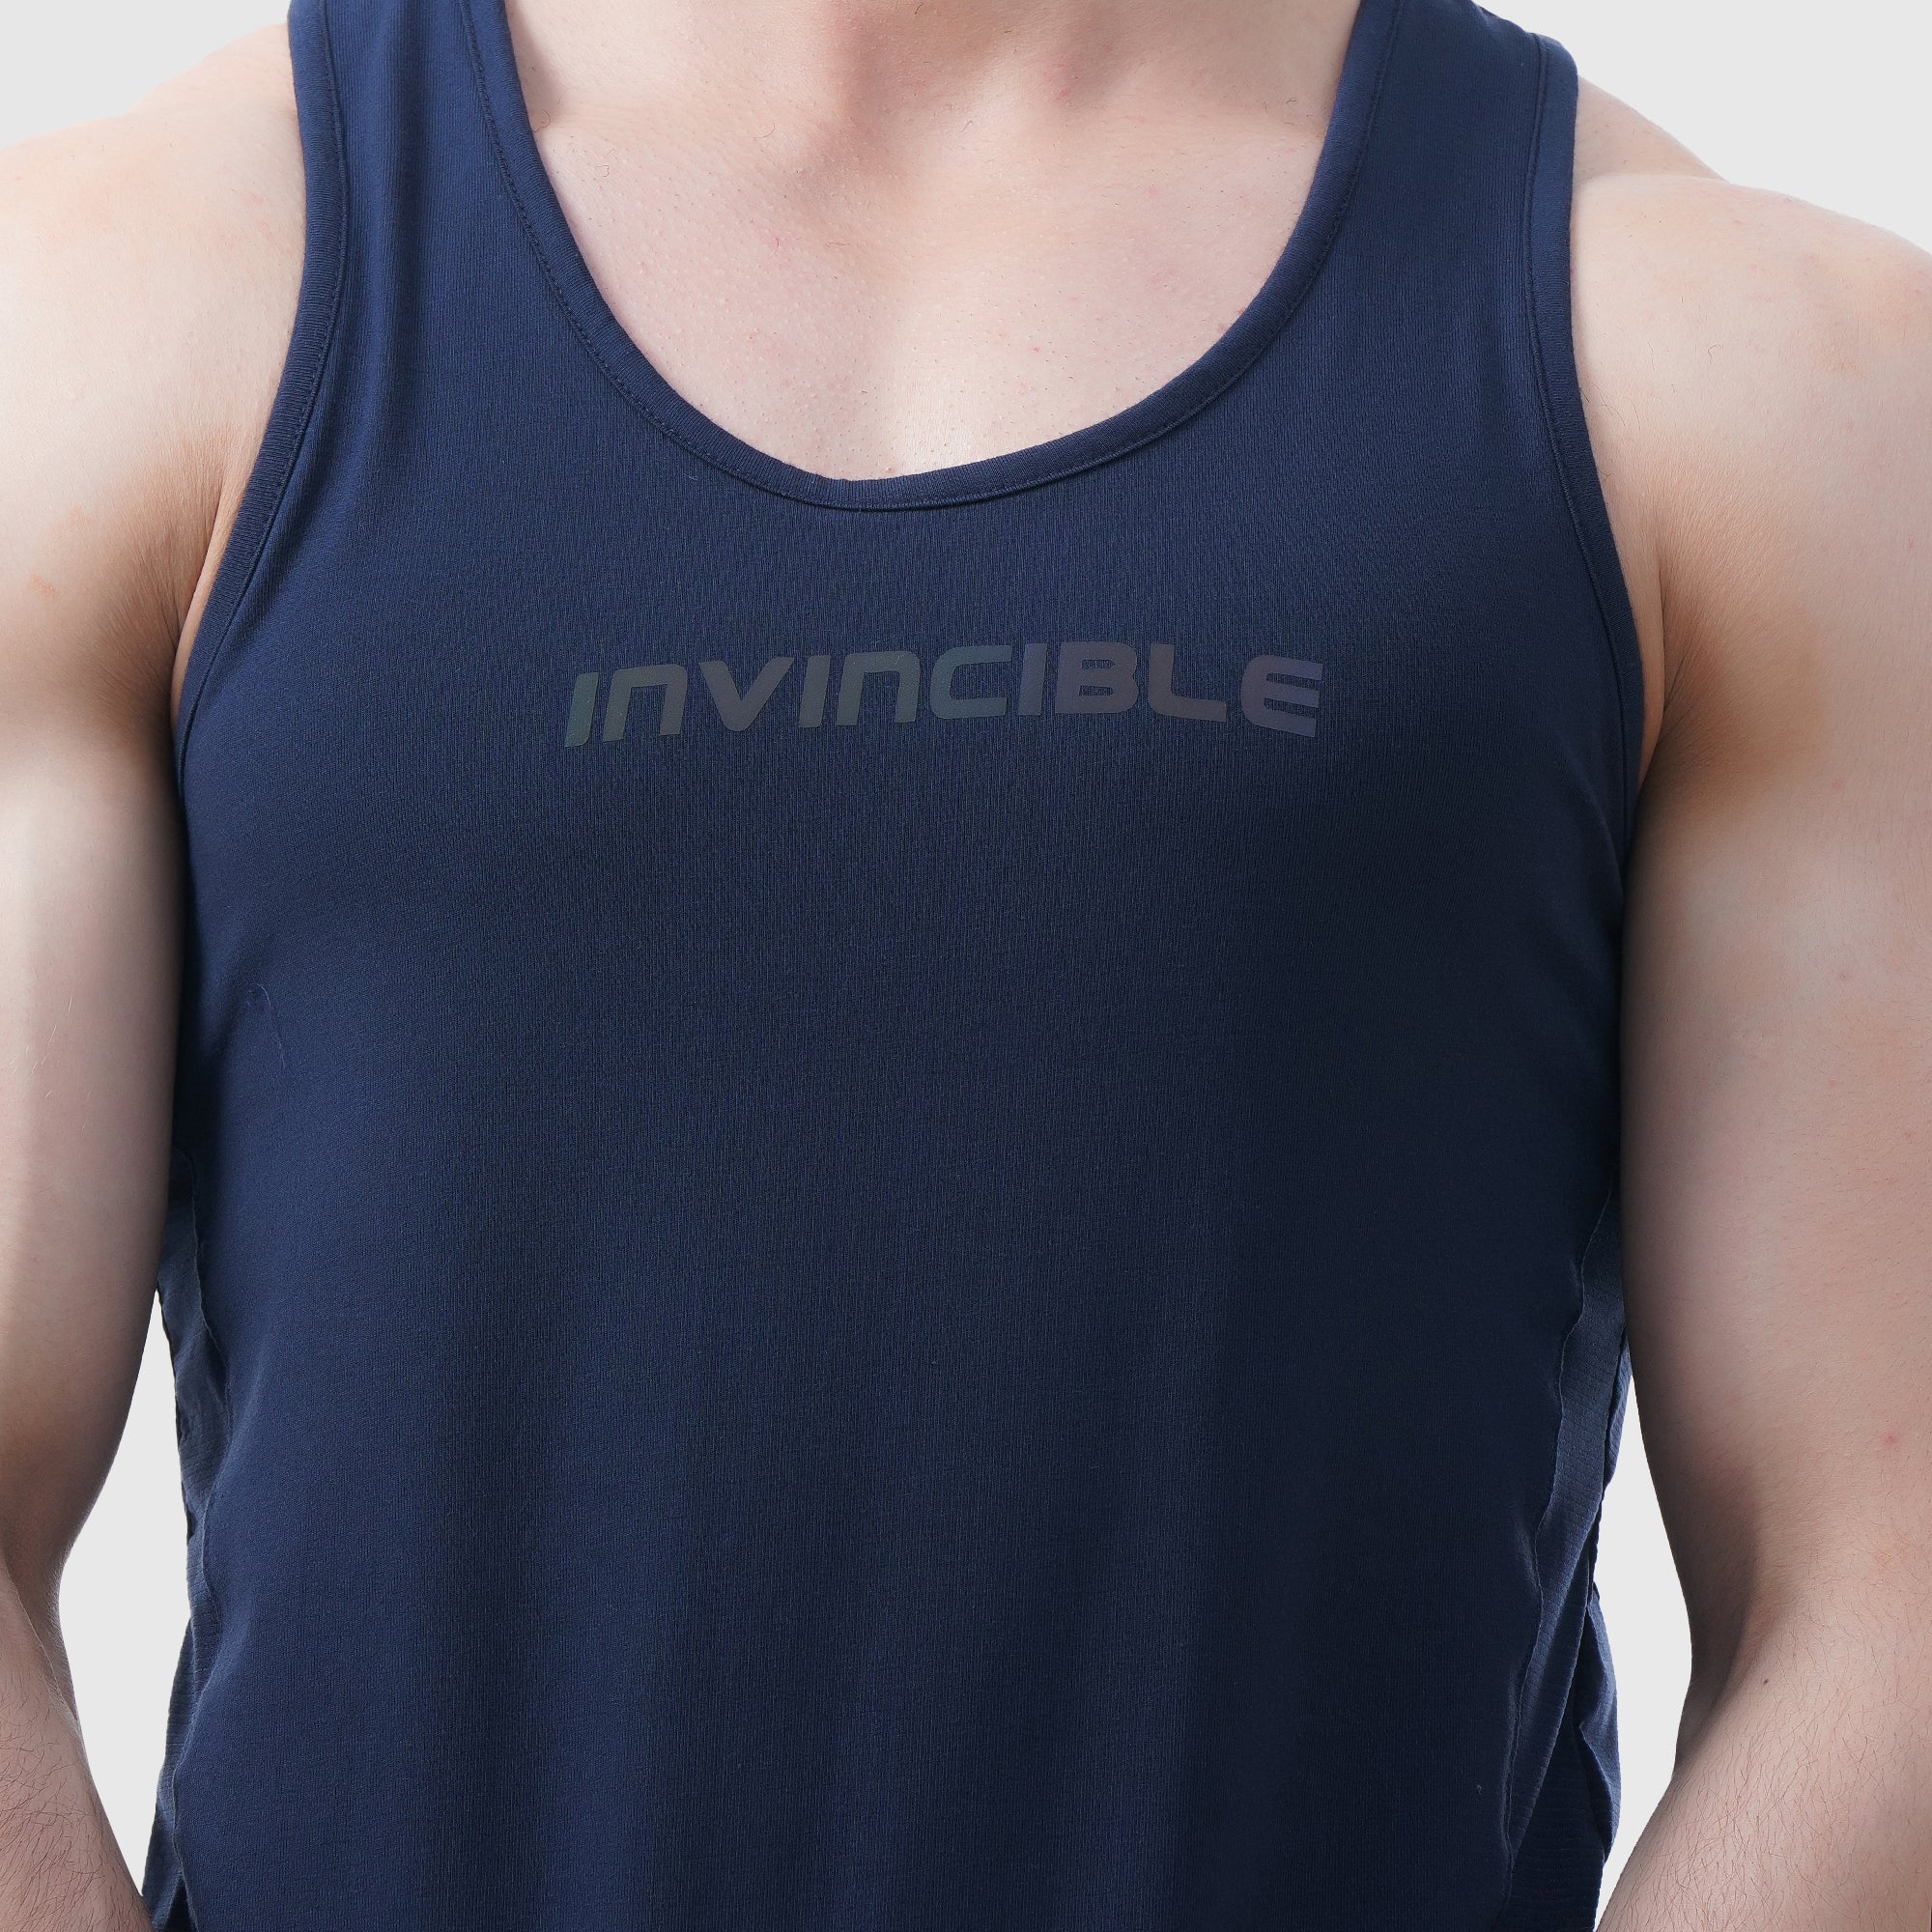 Invincible Athletic Tank (Dark Blue)